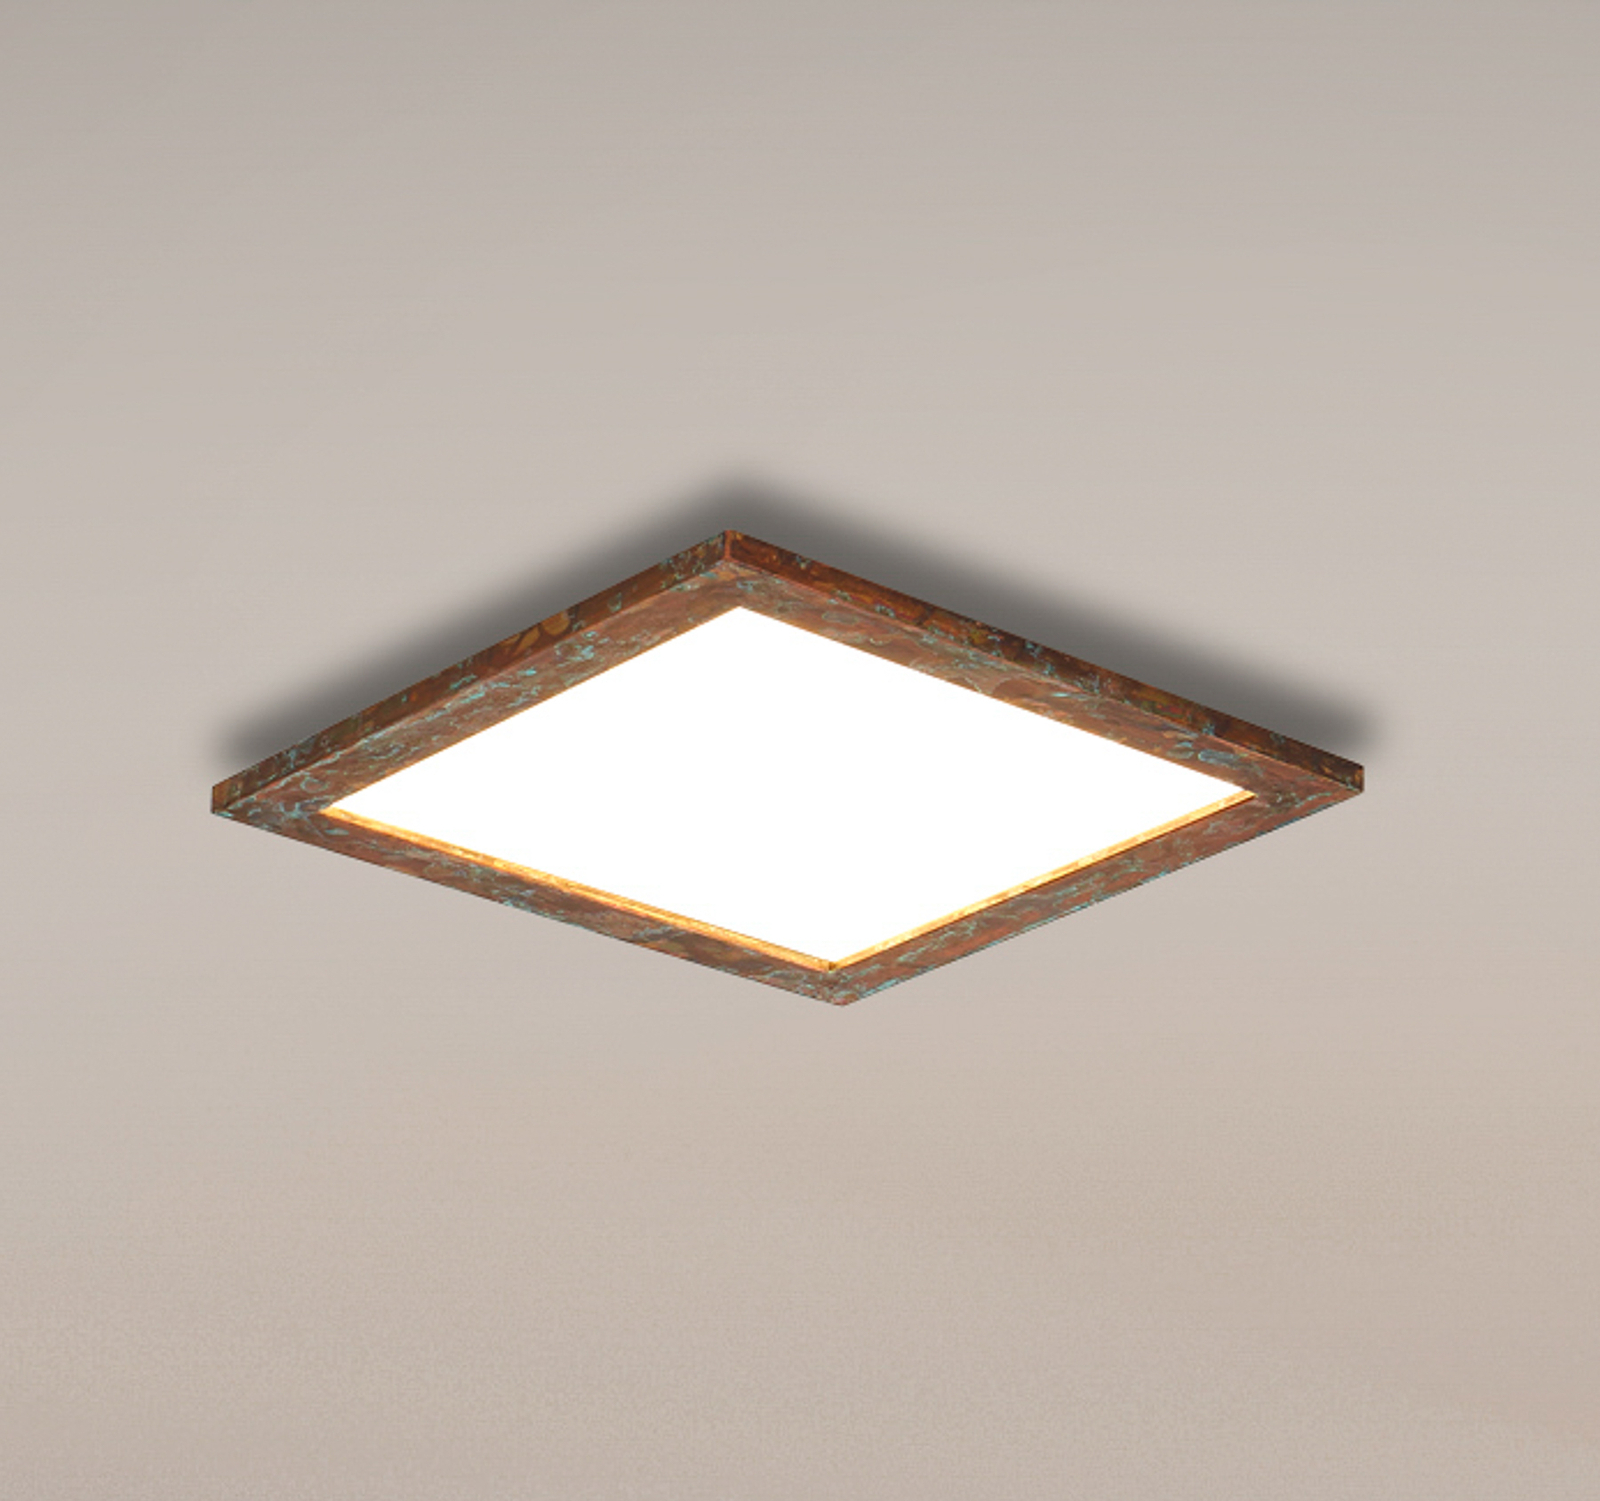 Lucande Aurinor LED-Panel Kupfer 45 cm